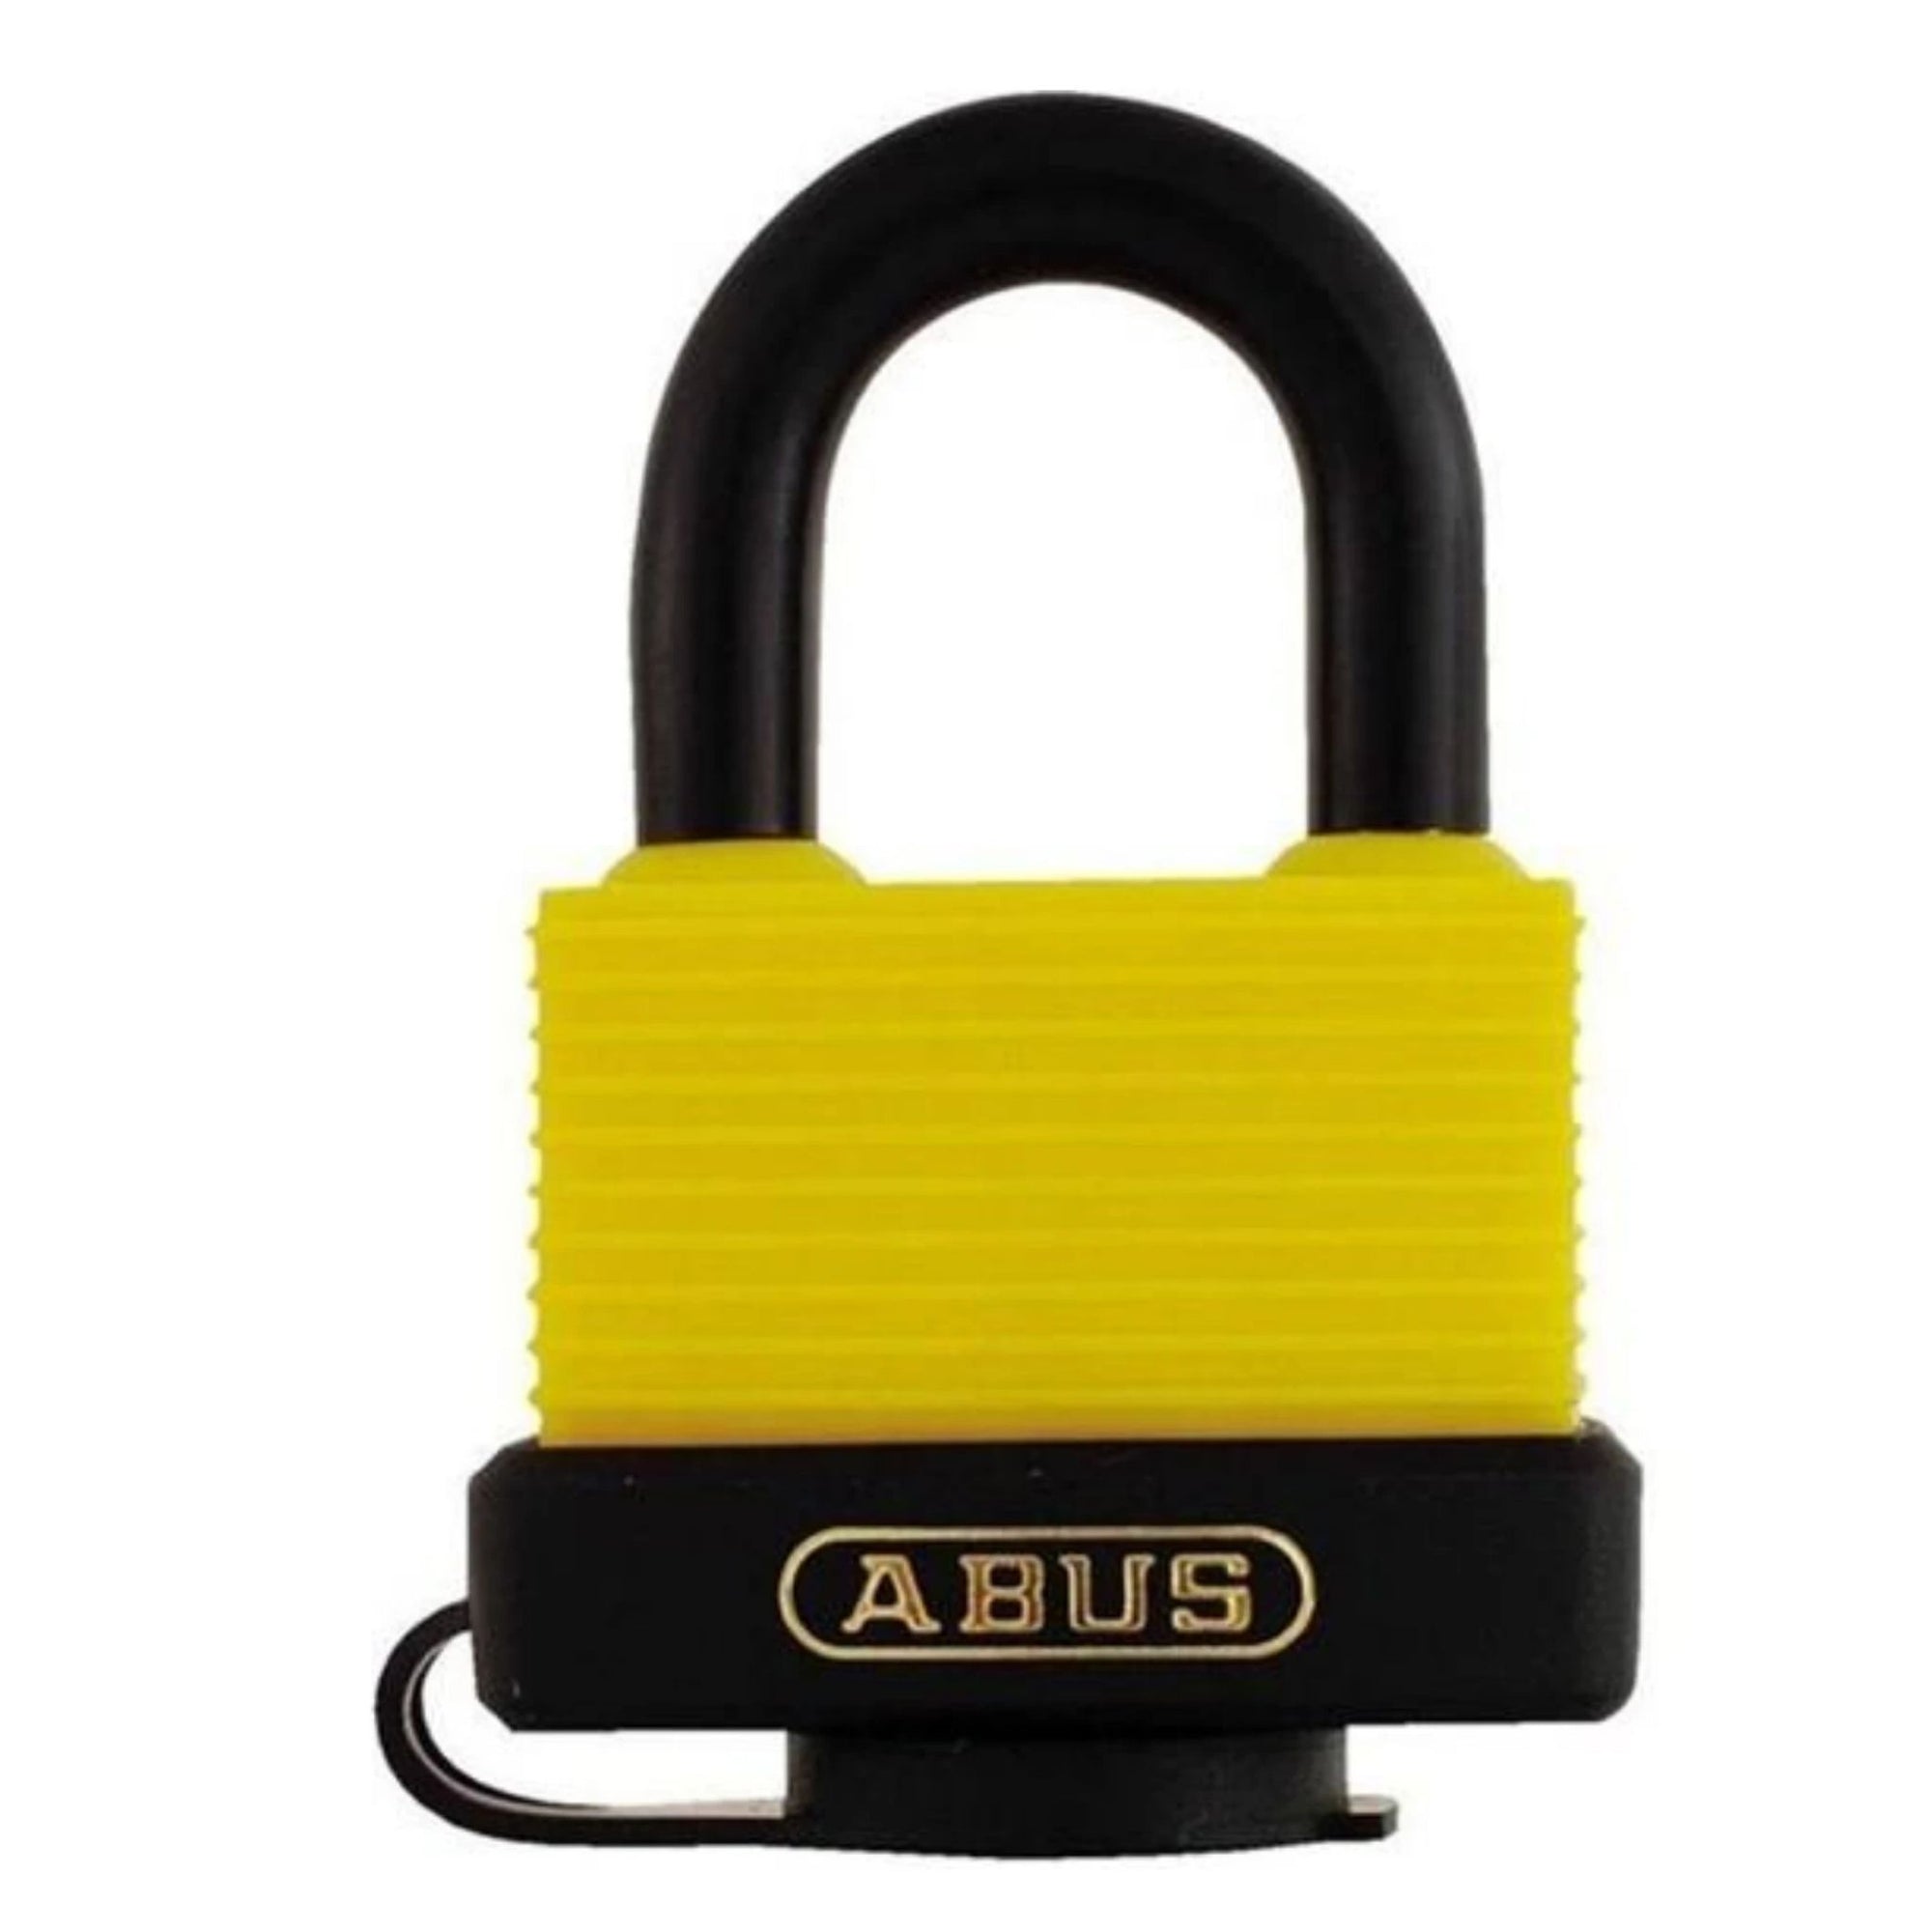 Abus 70/45 KA 6404 Lock Keyed Alike Weatherproof Brass Padlocks Keyed Alike to Match Existing Key Number KA6404 - The Lock Source